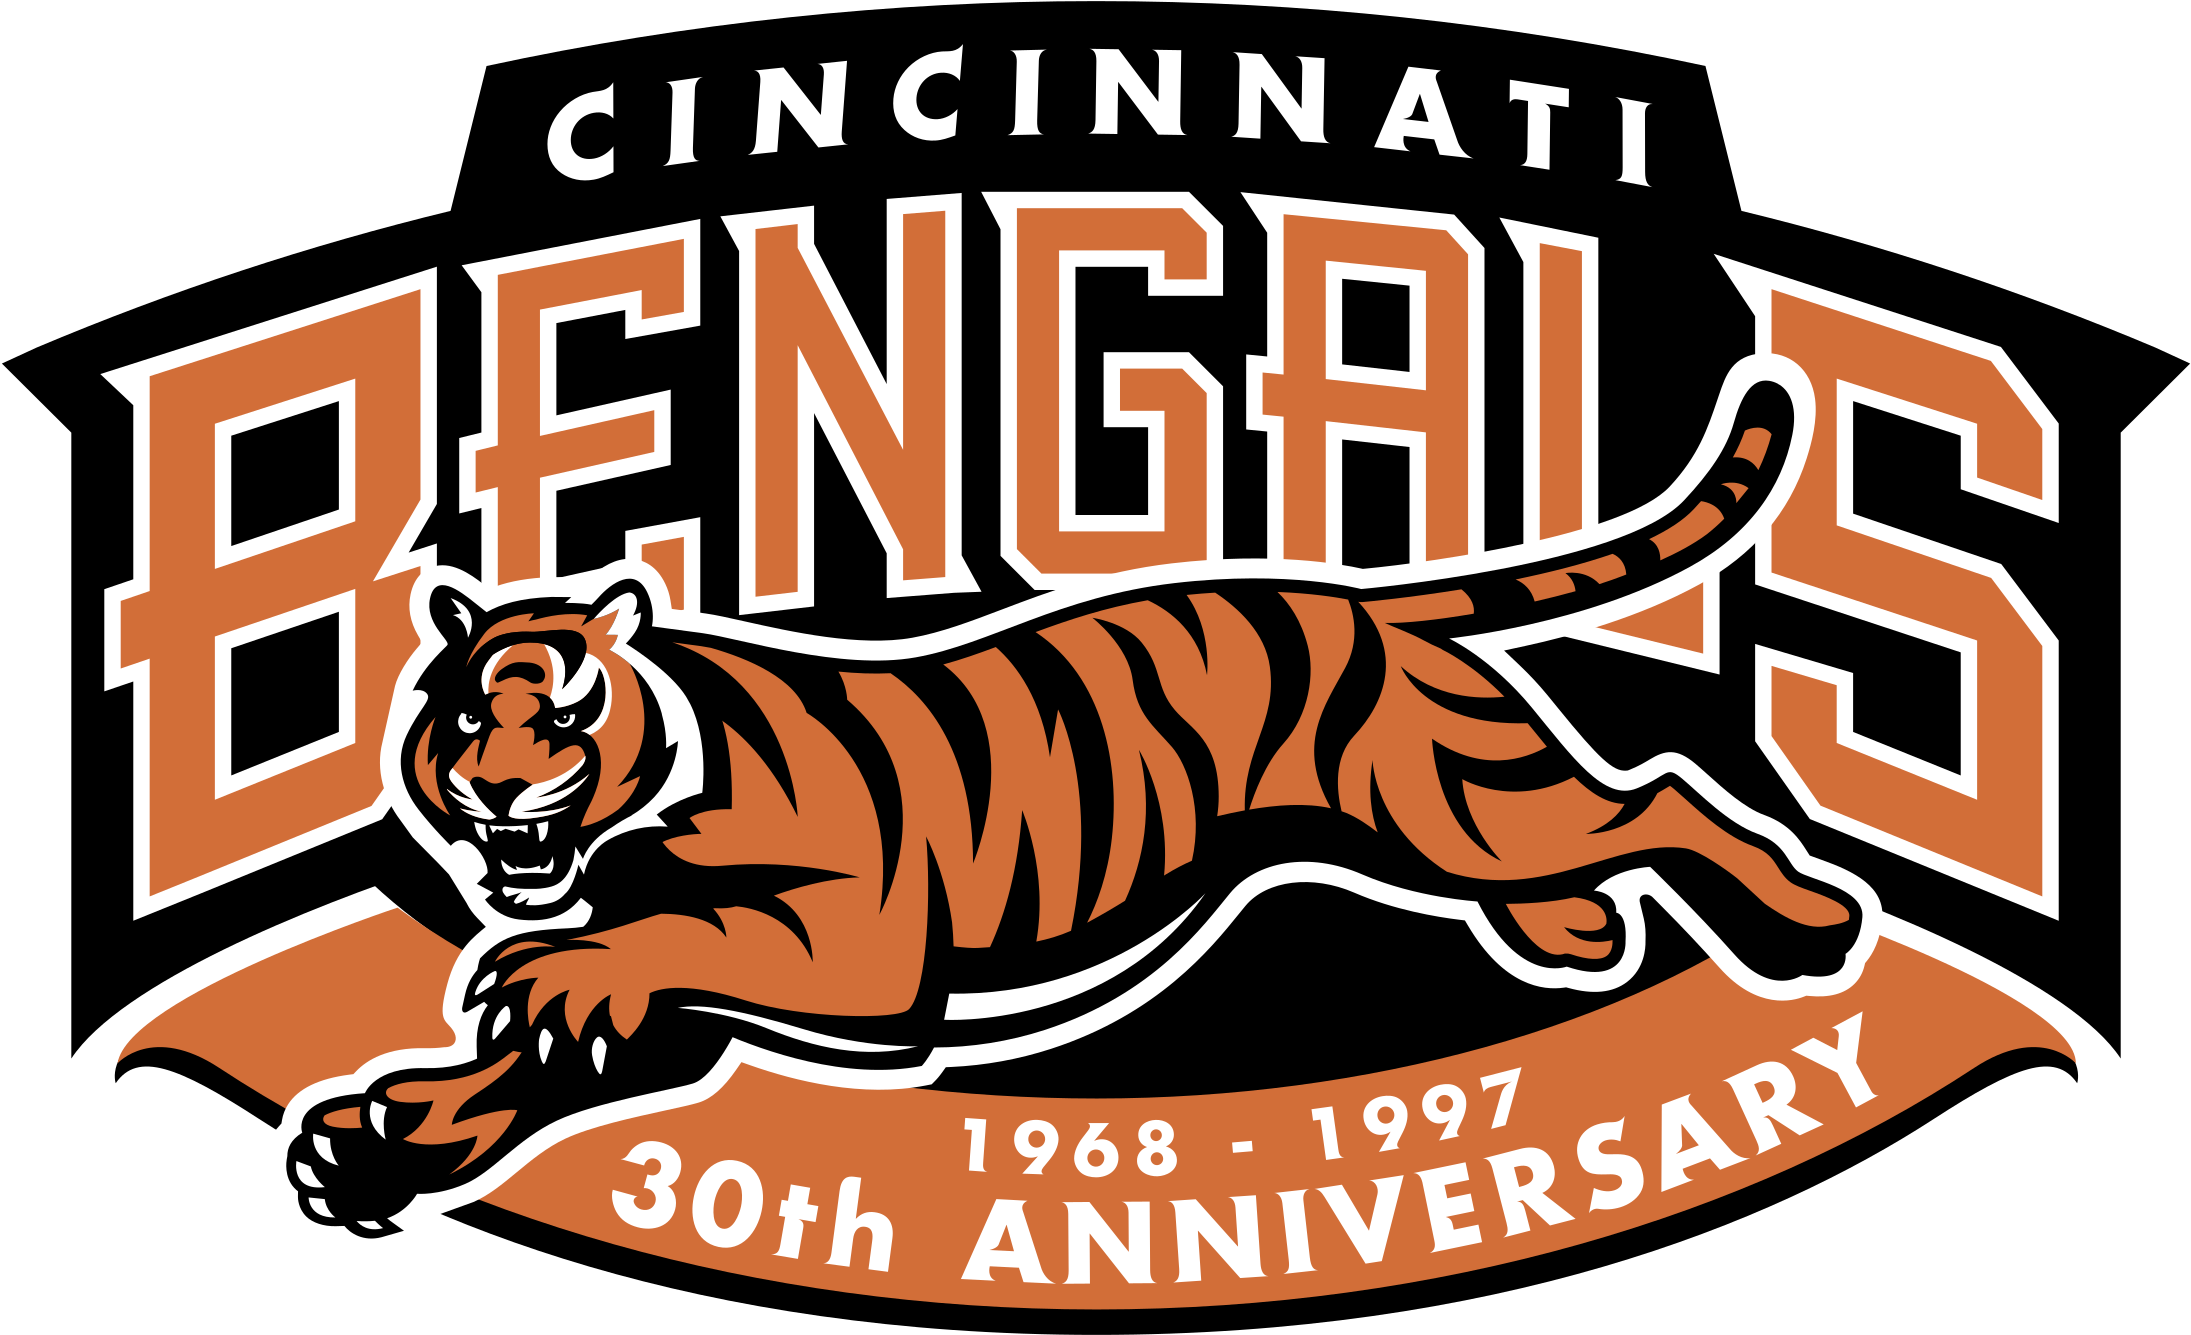 Download Cinncinati Bengals Logo Png Transparent Cincinnati Bengals Logo Png Image With No Background Pngkey Com